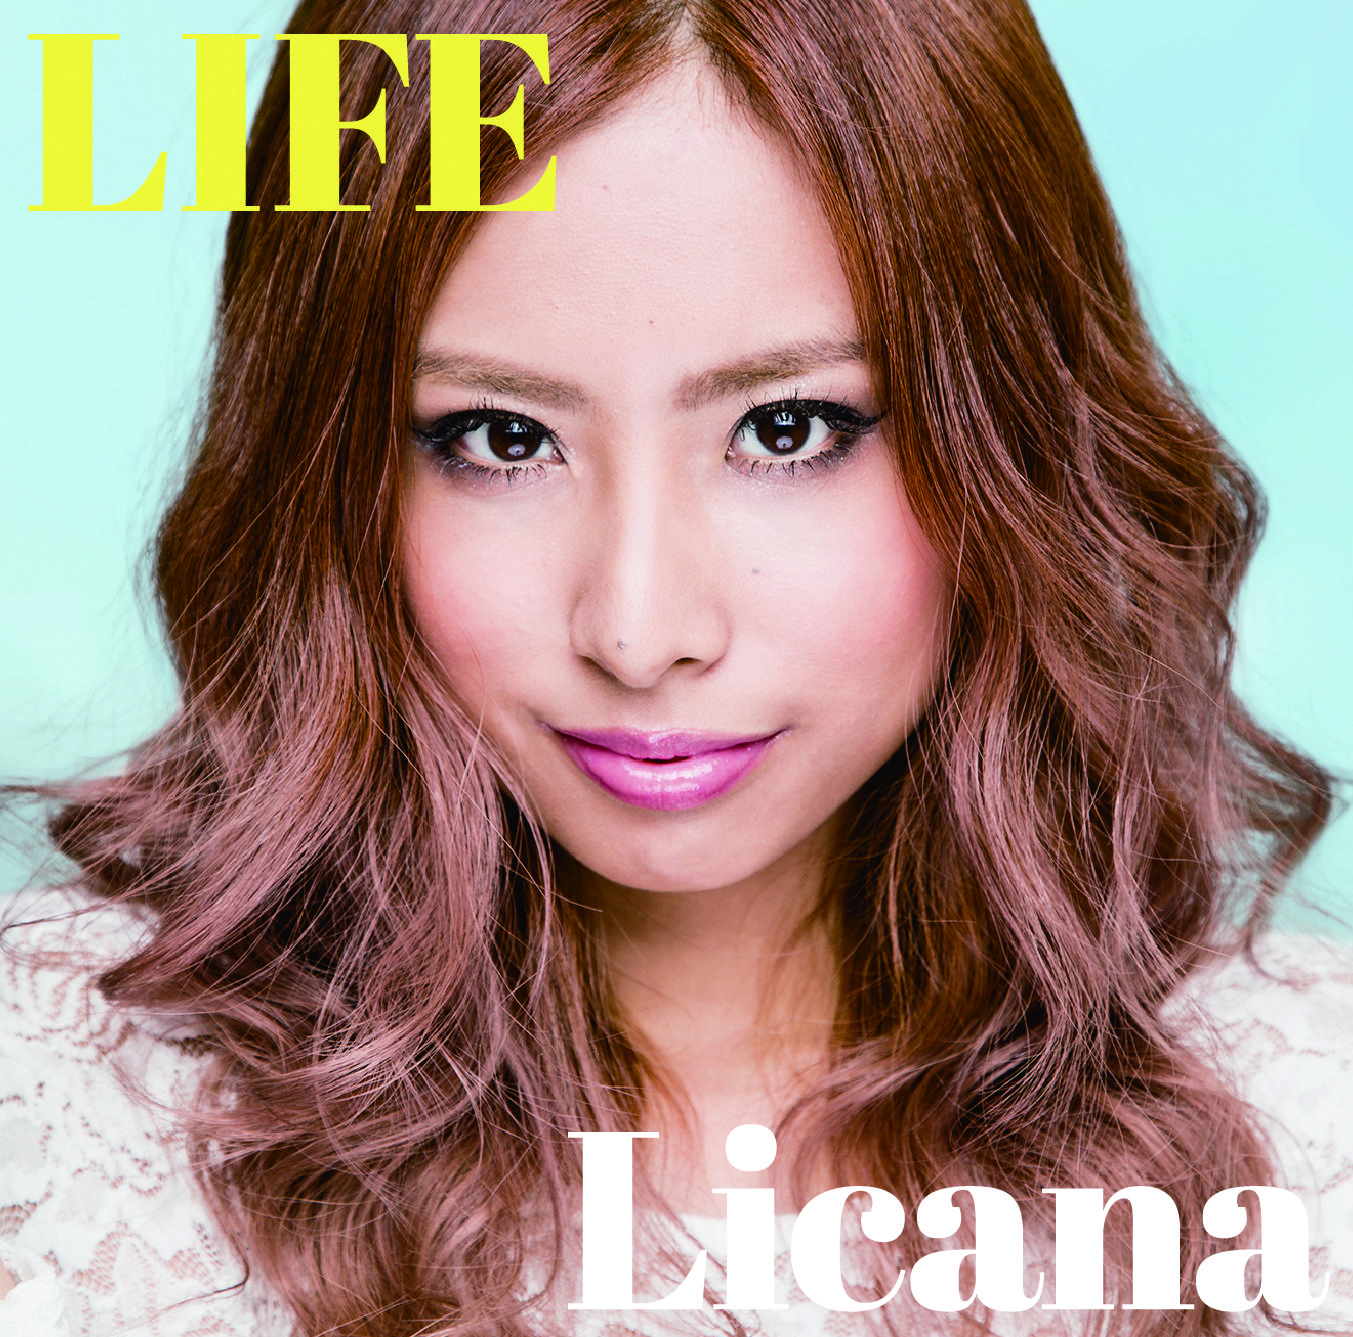 Next Stage歌词 歌手Licana-专辑LIFE-单曲《Next Stage》LRC歌词下载